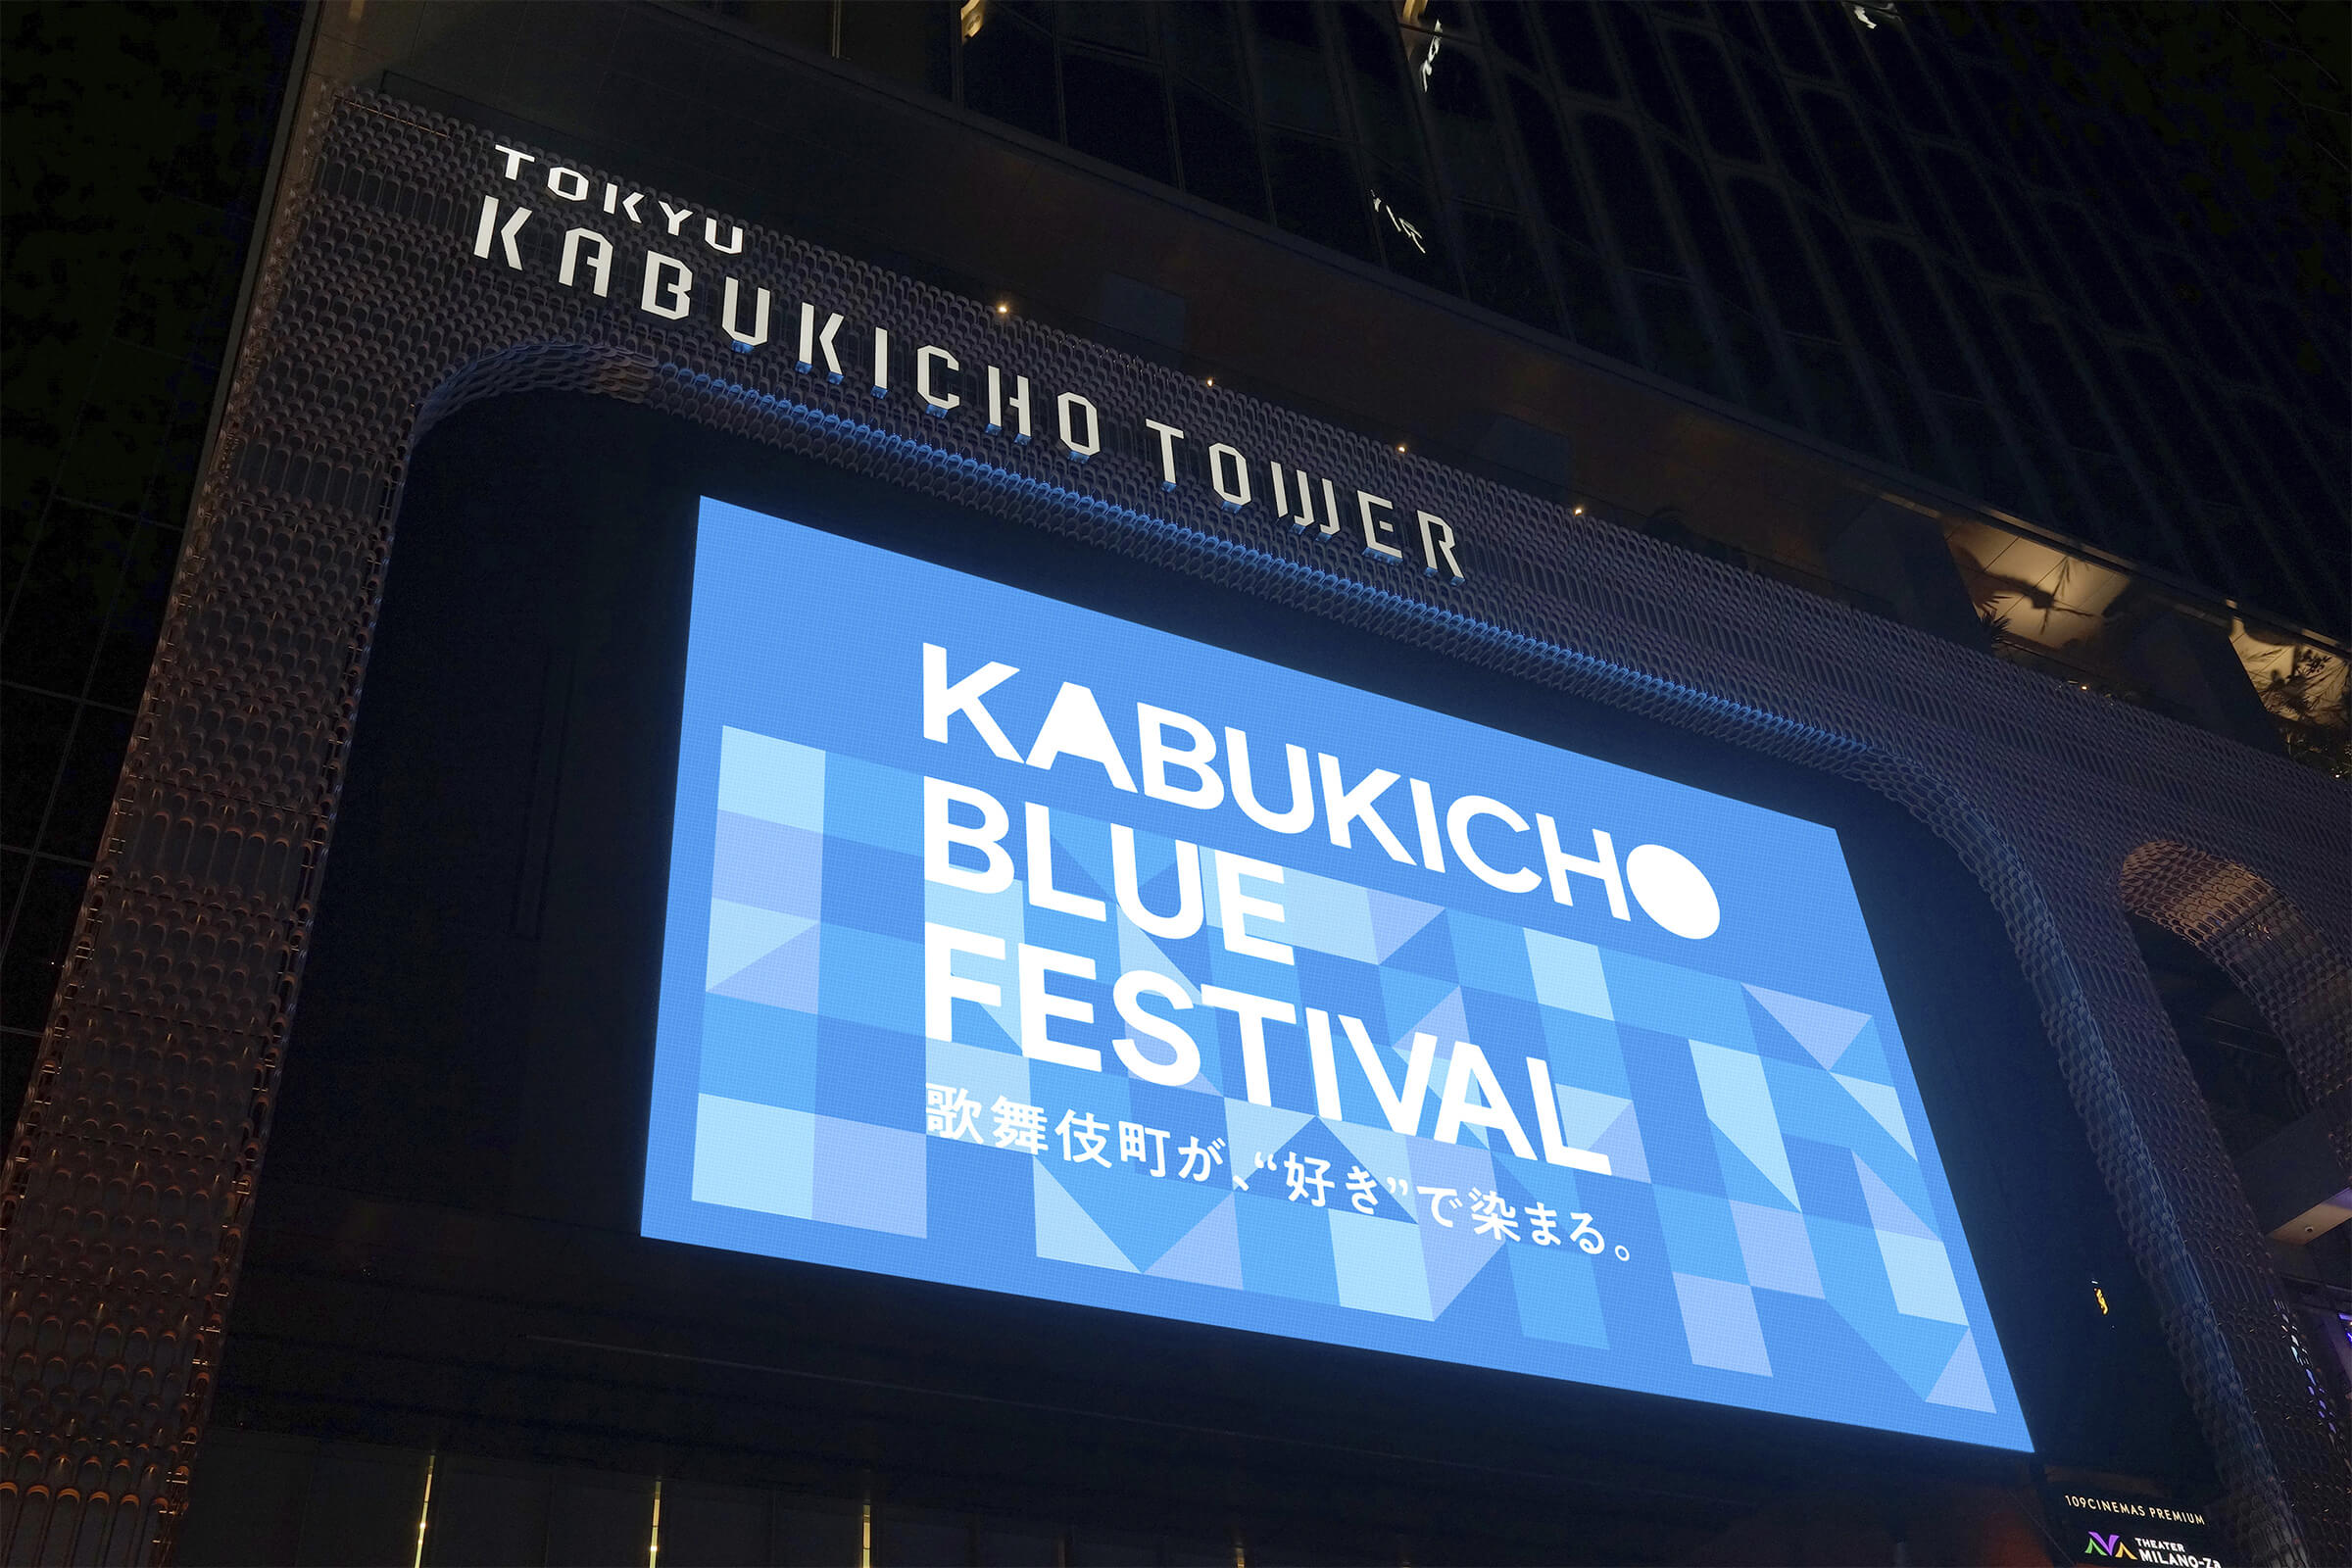 KABUKICHO BLUE FESTIVAL_VISUAL DESIGN イメージ